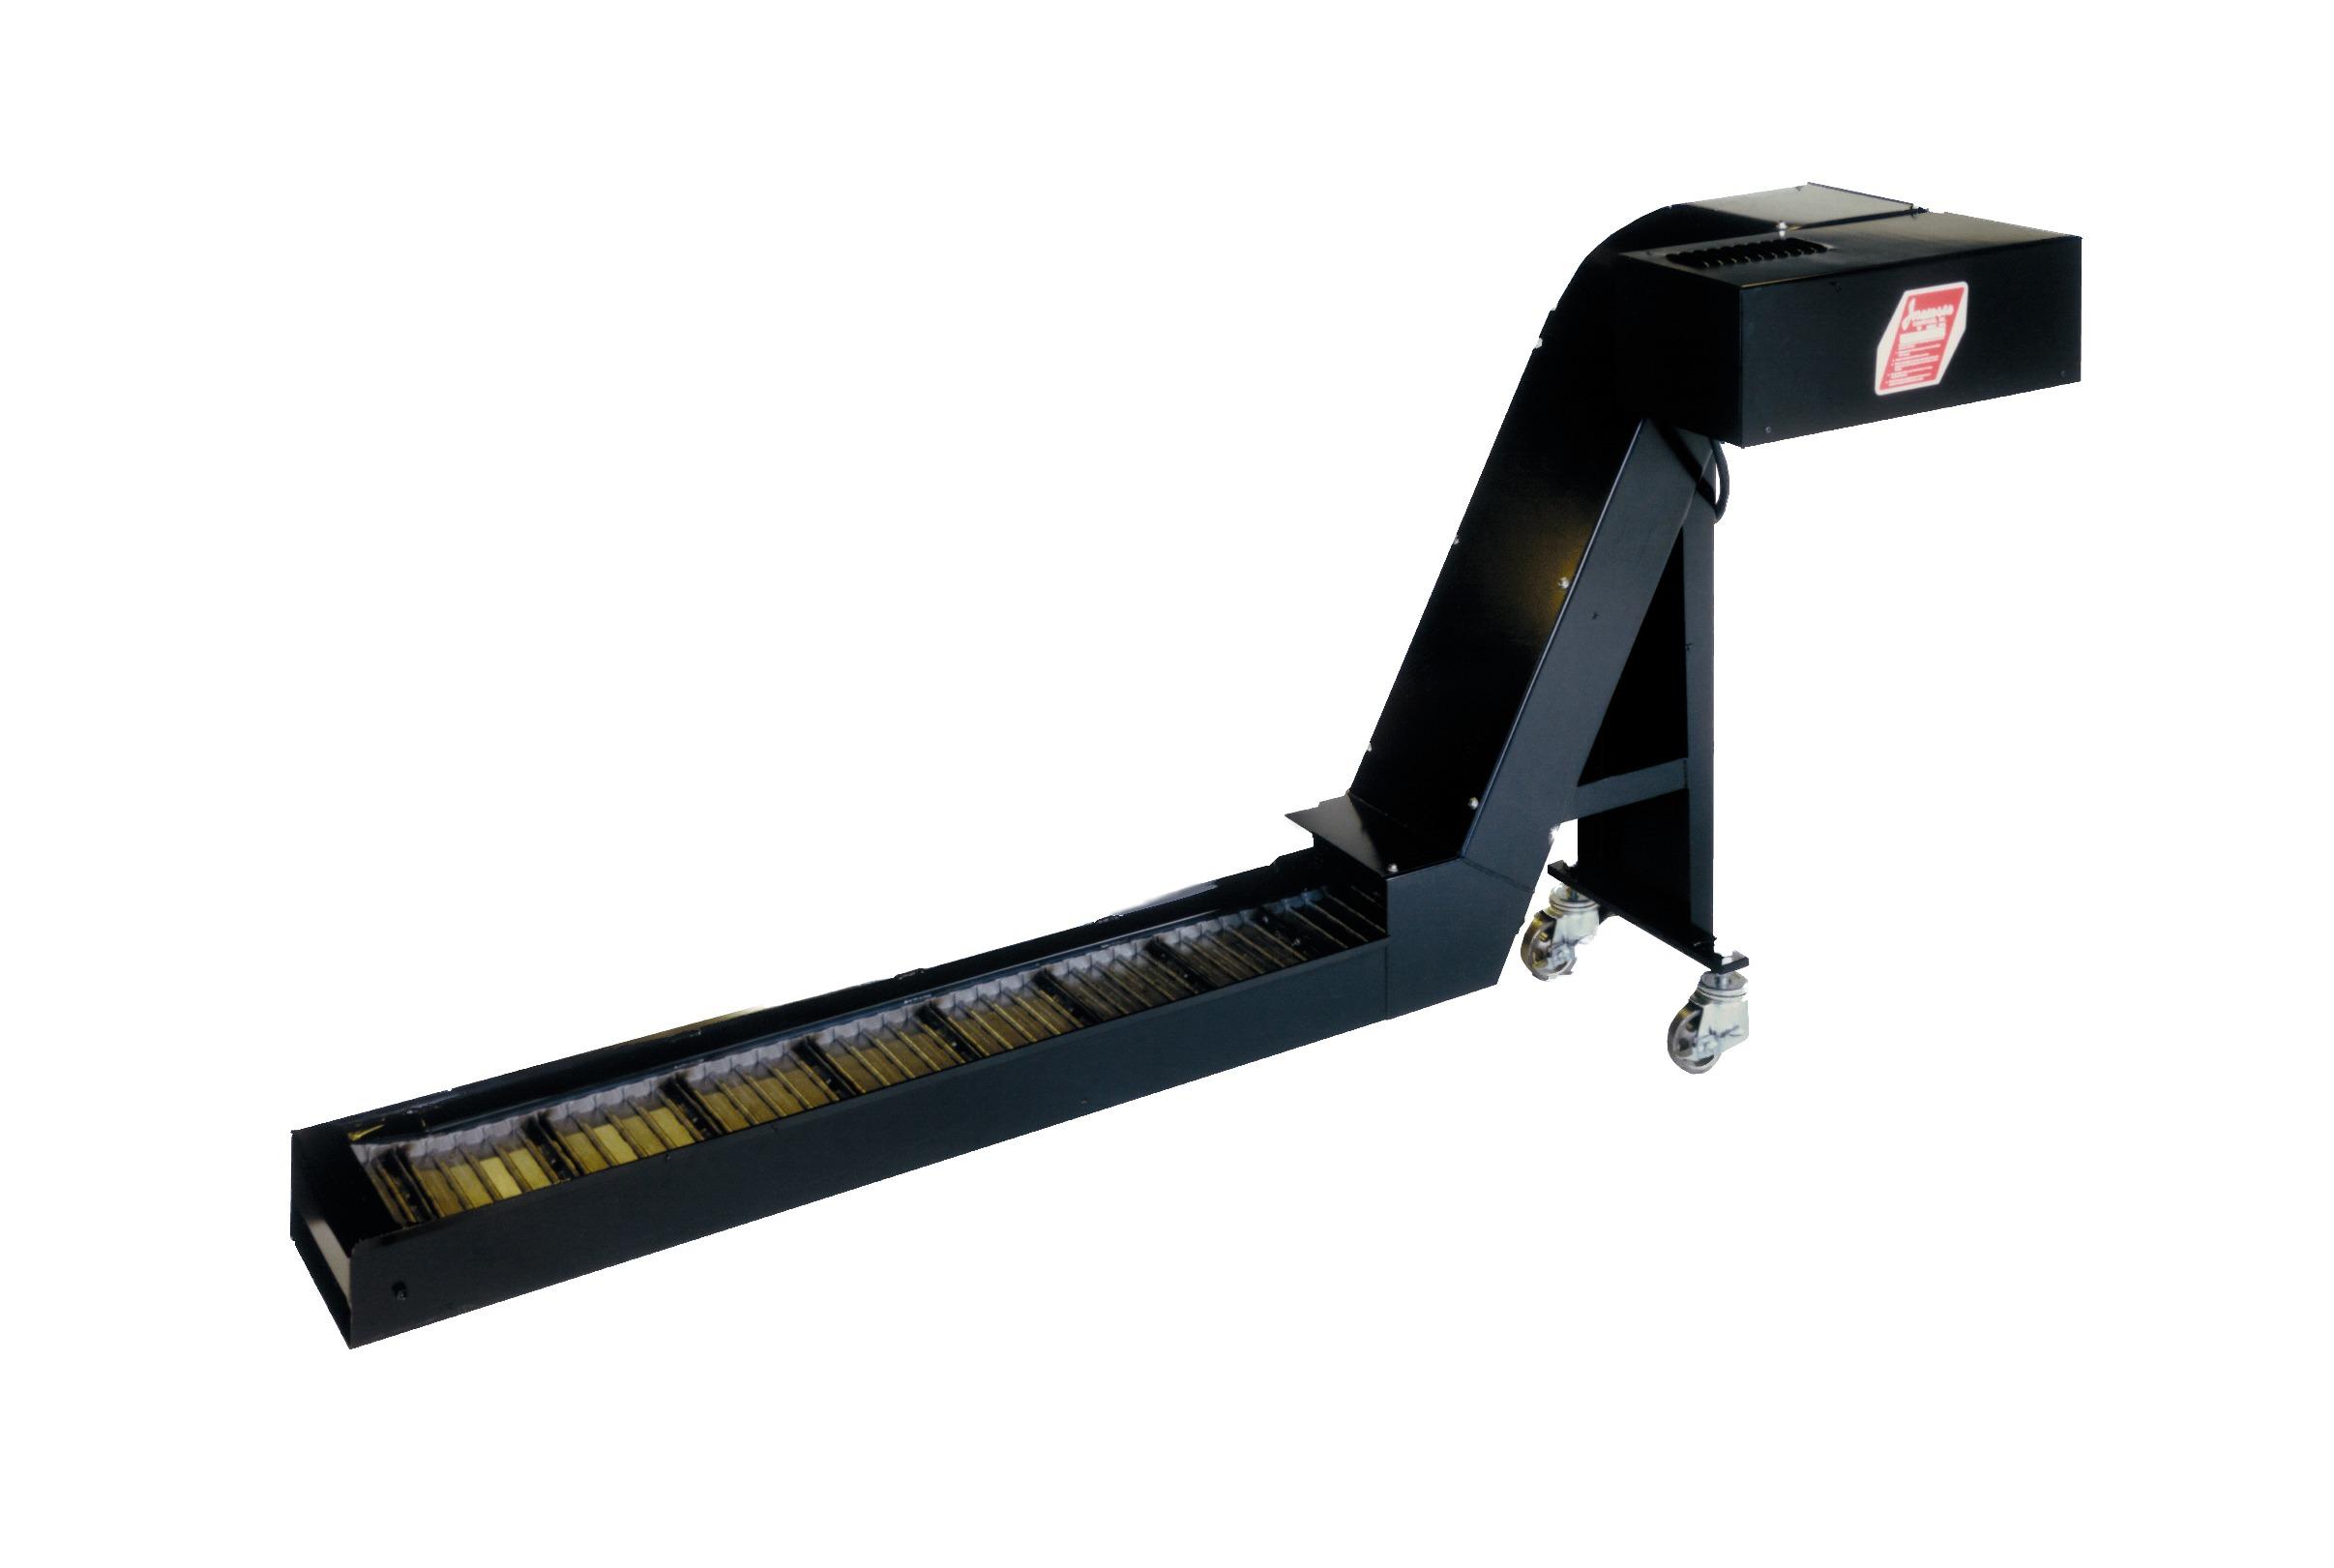 Product X-Treme Duty Conveyors - Jorgensen Conveyor and Filtration Solutons : Jorgensen Conveyors and Filtration Solutions image